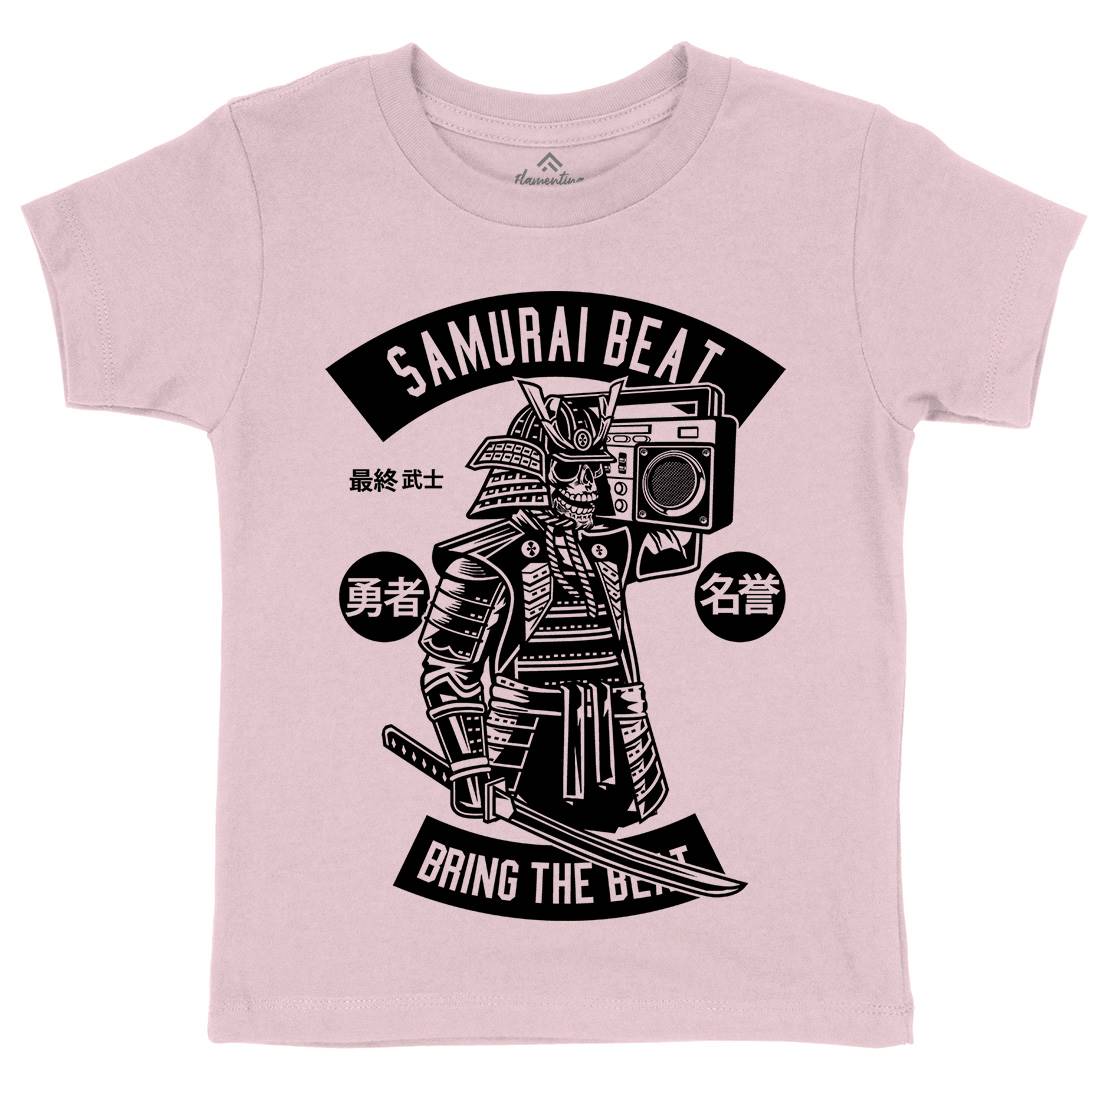 Samurai Beat Kids Crew Neck T-Shirt Asian B615